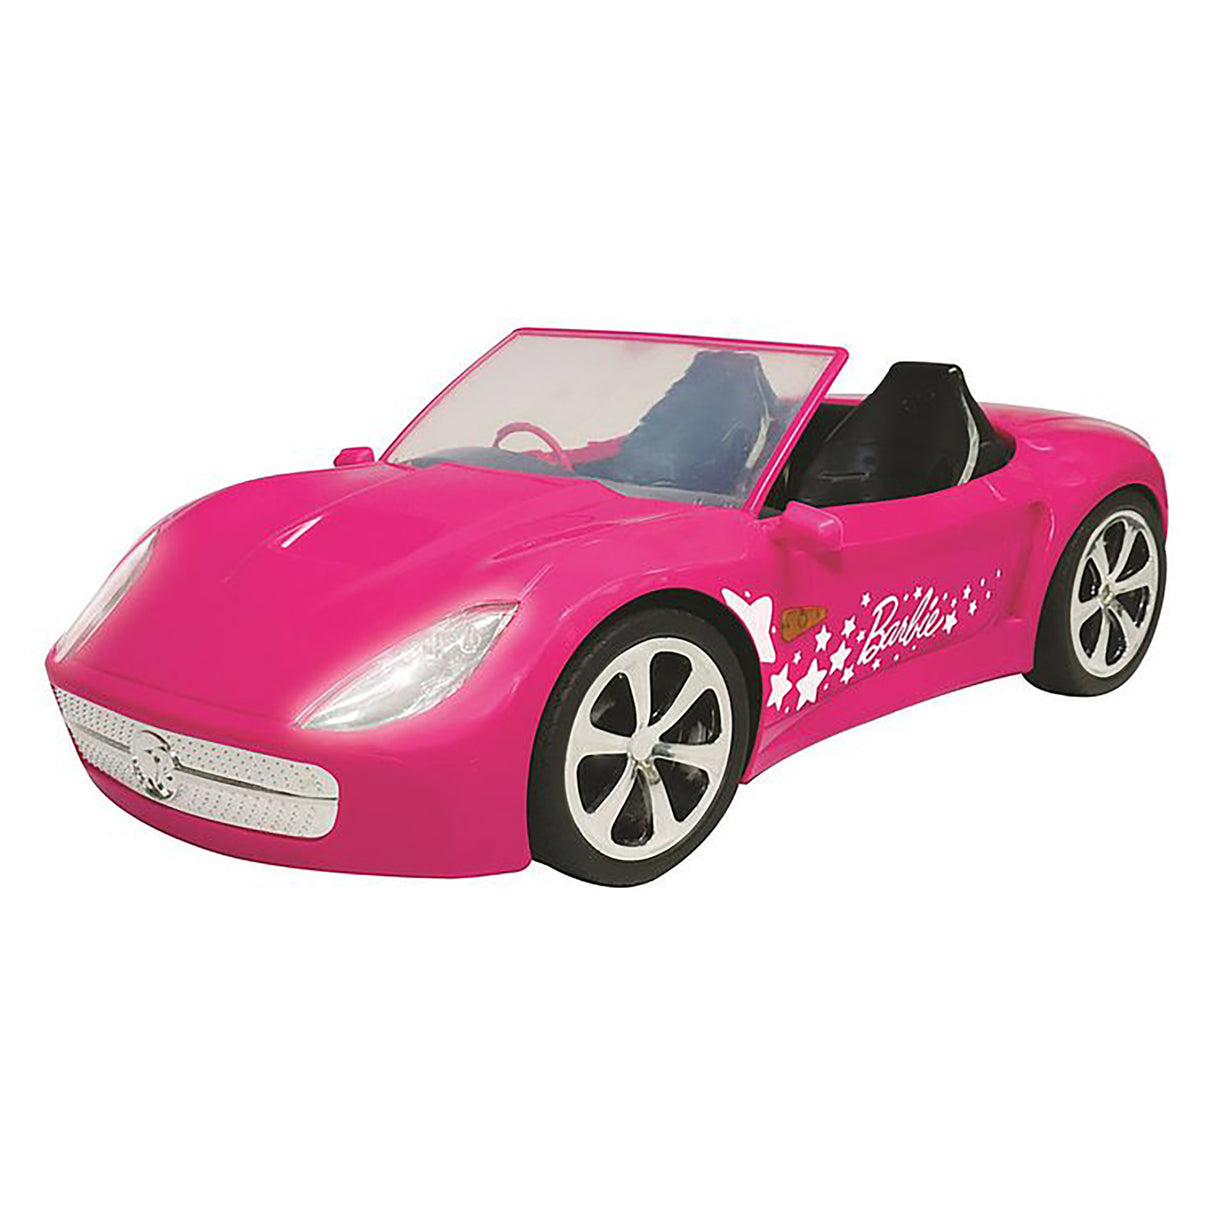 Barbie Remote Control Convertible Car